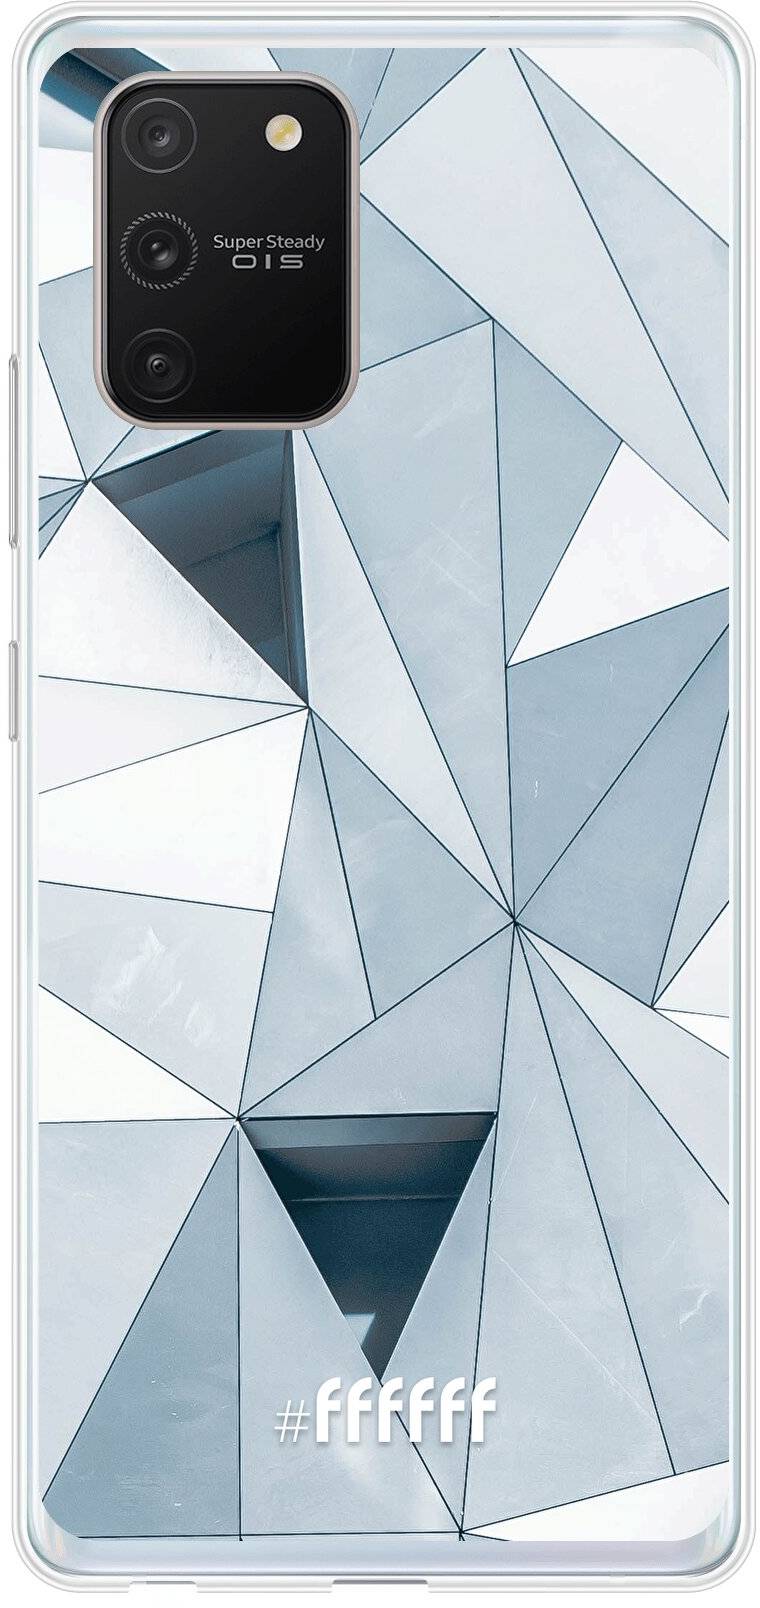 Mirrored Polygon Galaxy S10 Lite